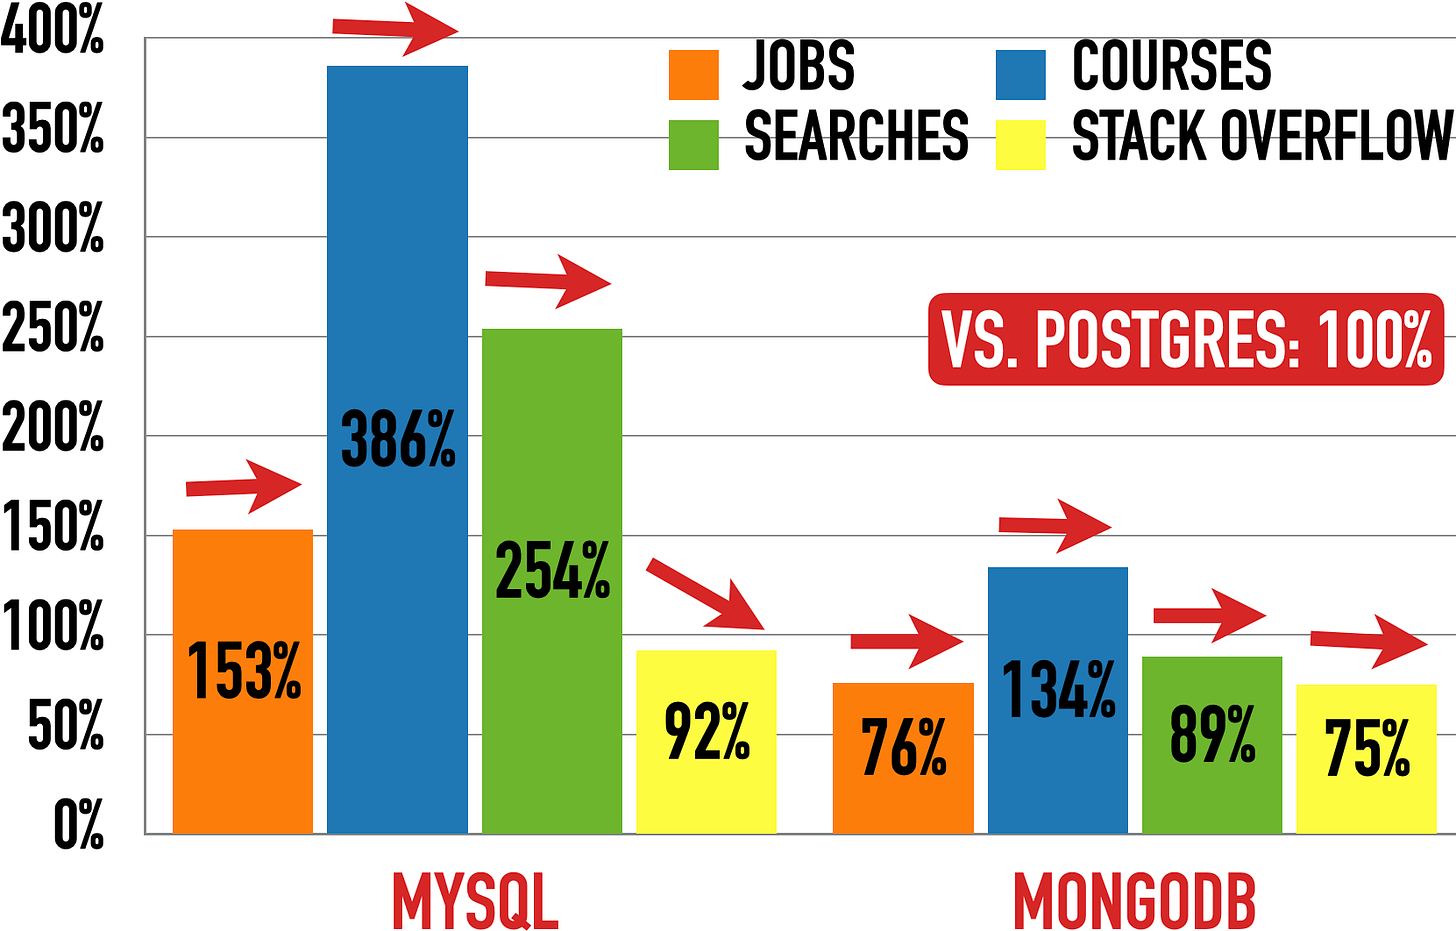 MySql (left) And MongoDB (right) vs. Postgres (100%)